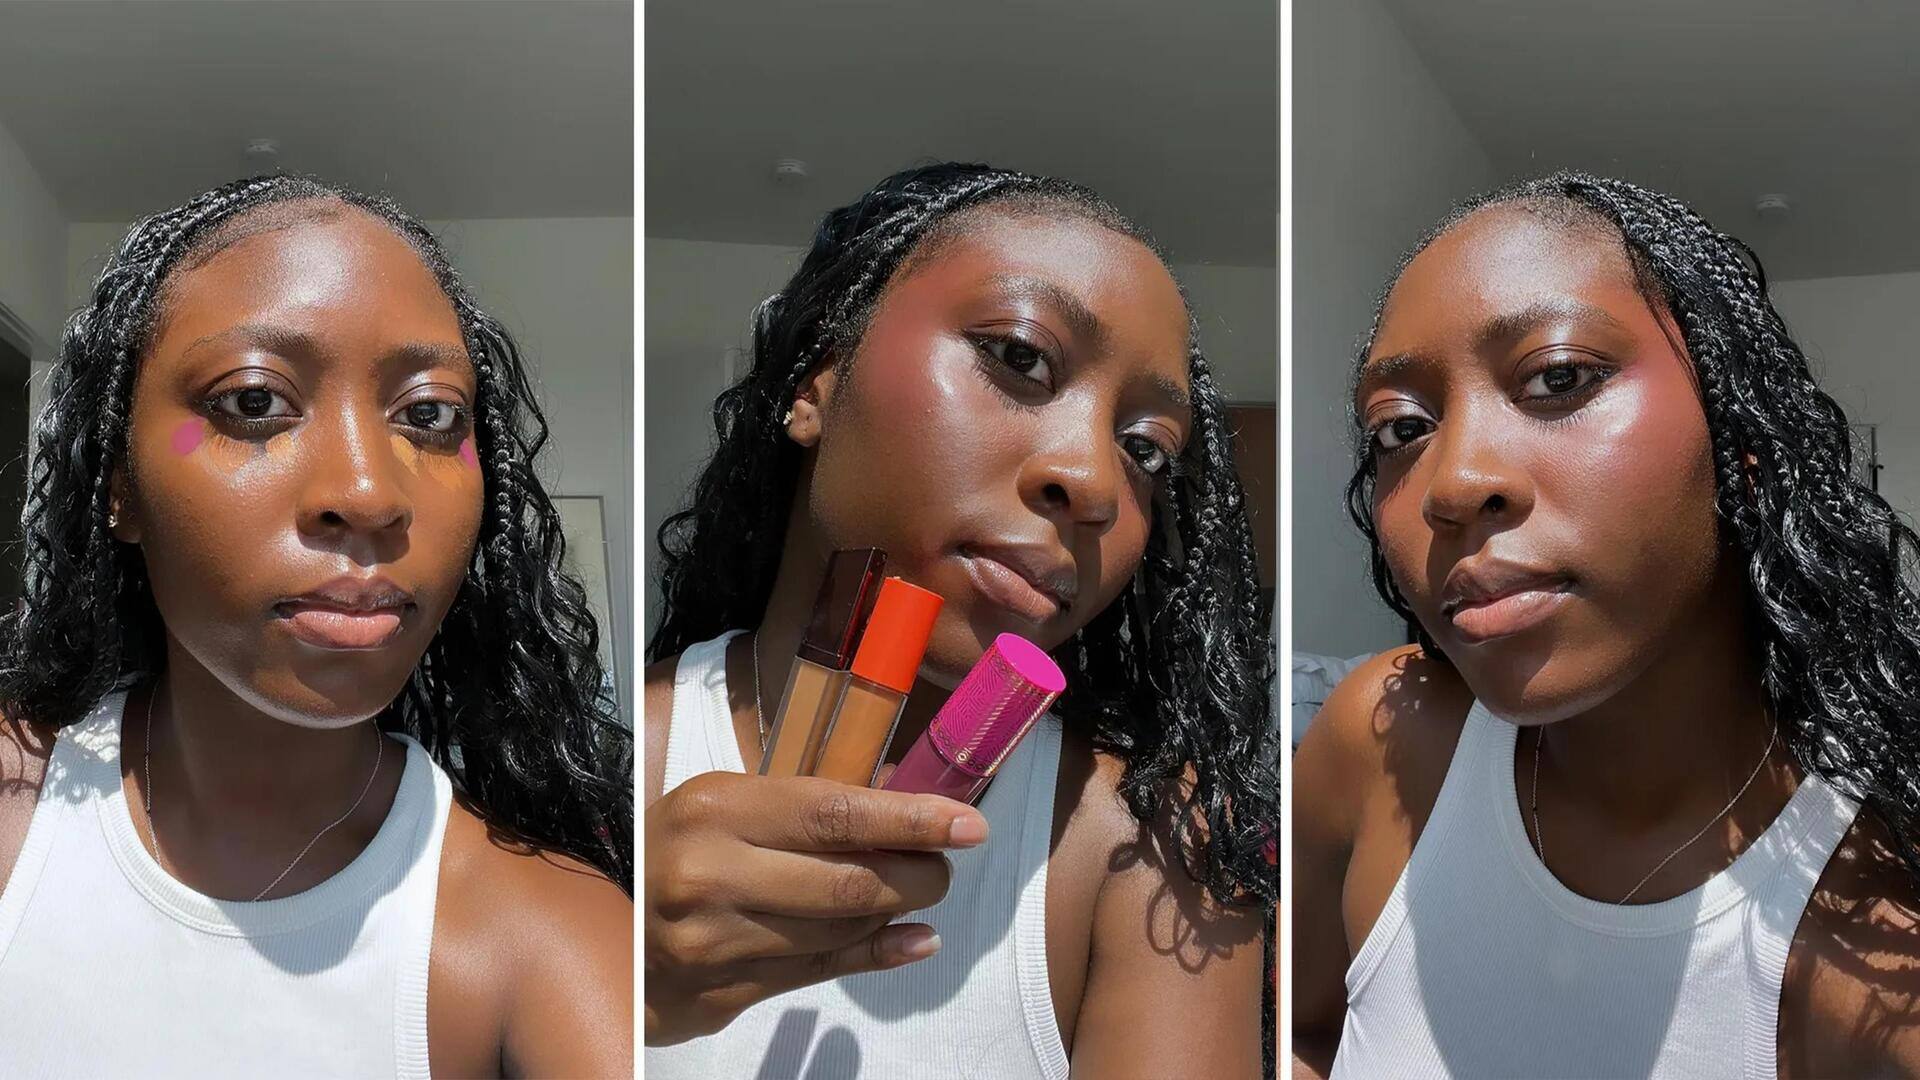 Ombre concealer trend: A makeup hack you should know